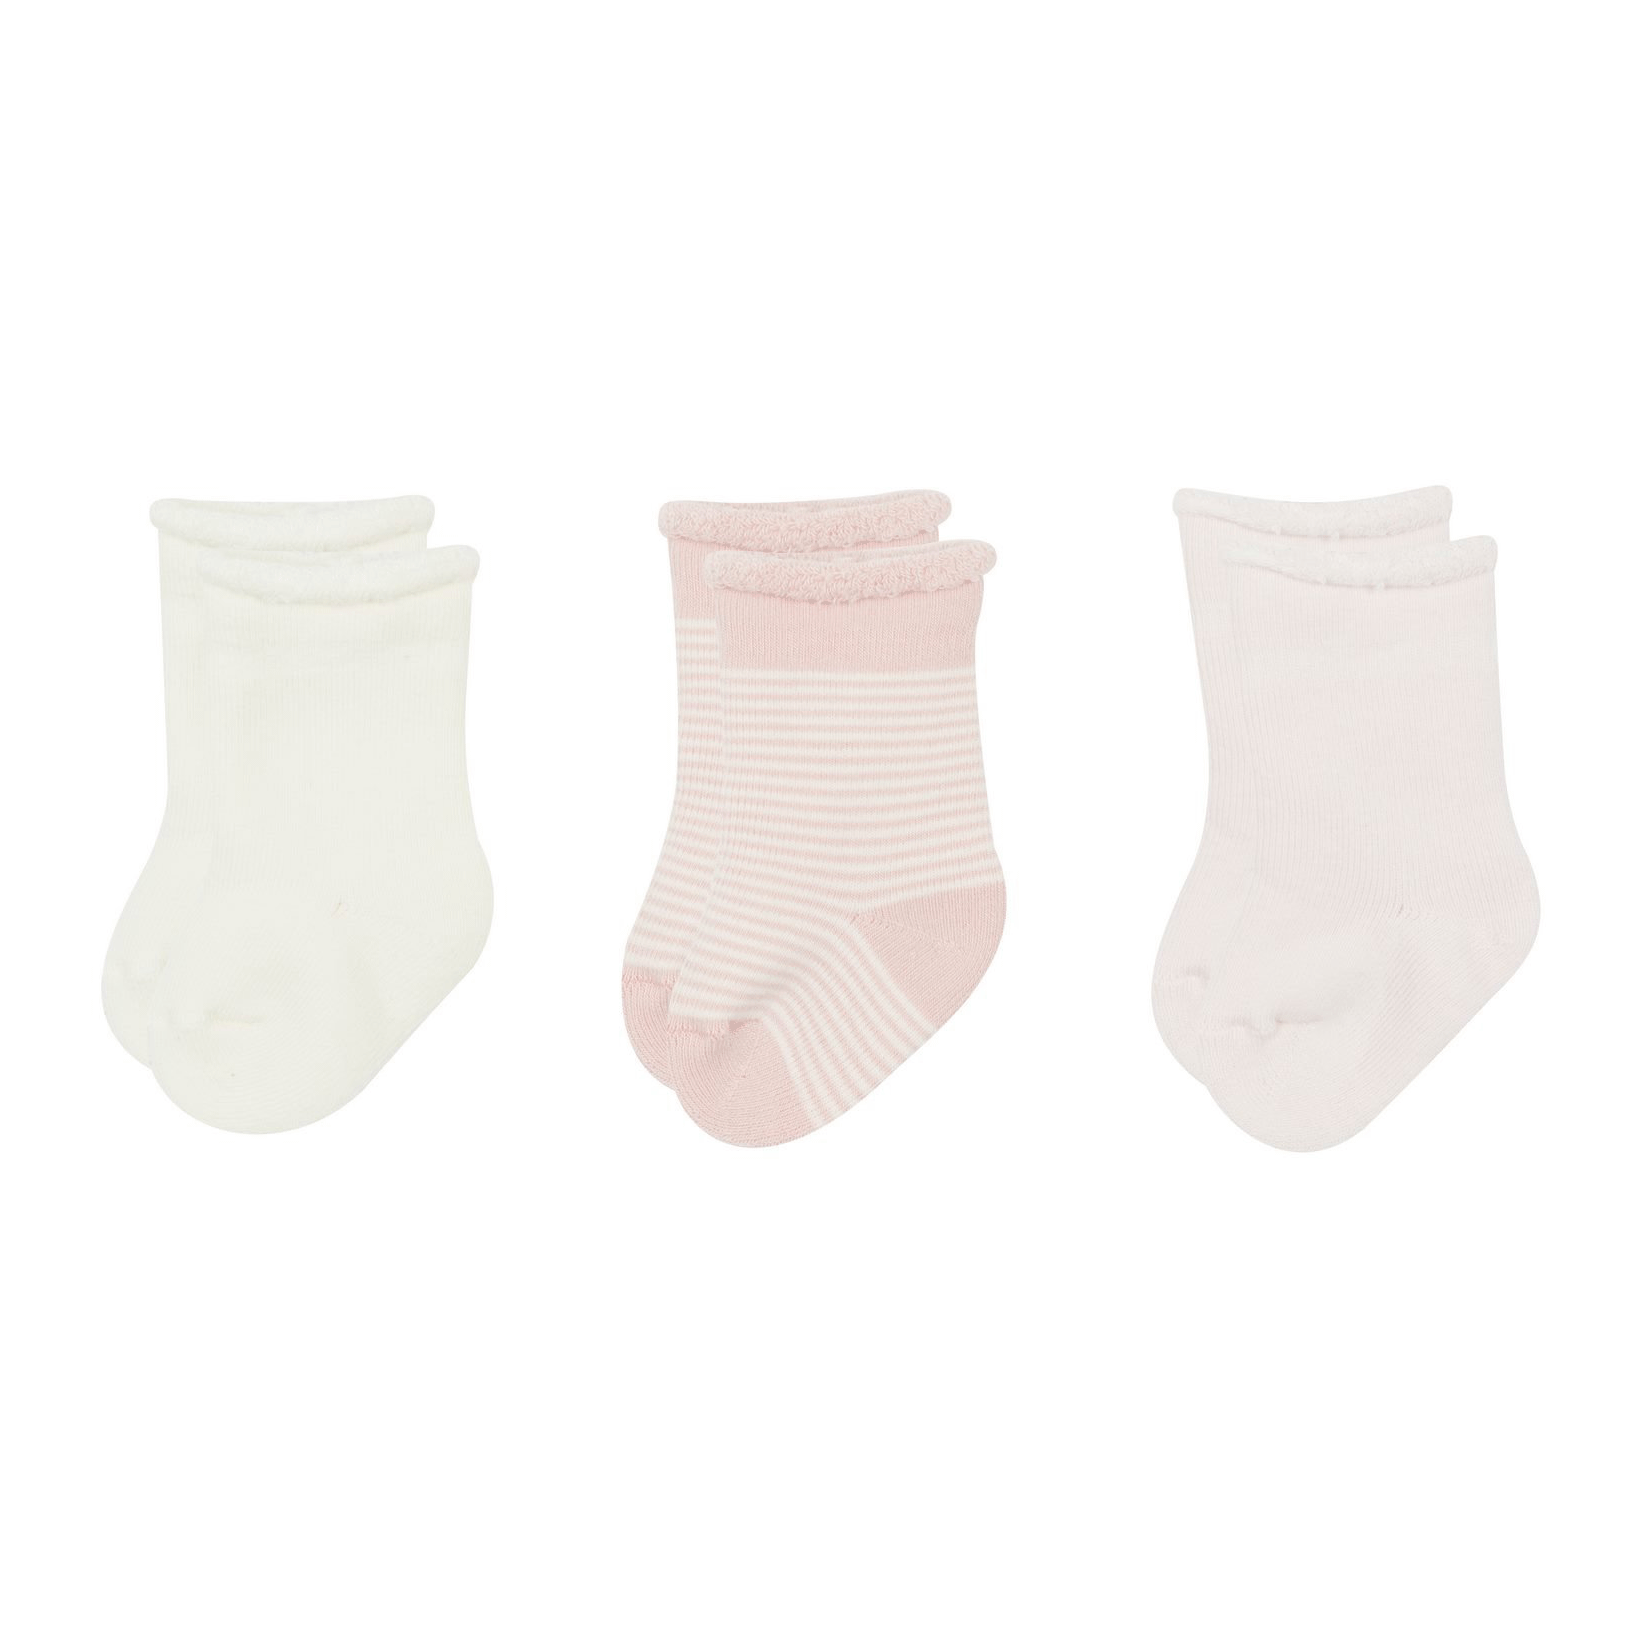 Petit Bateau set of 3 baby socks for a girl at Bonjour Baby Baskets